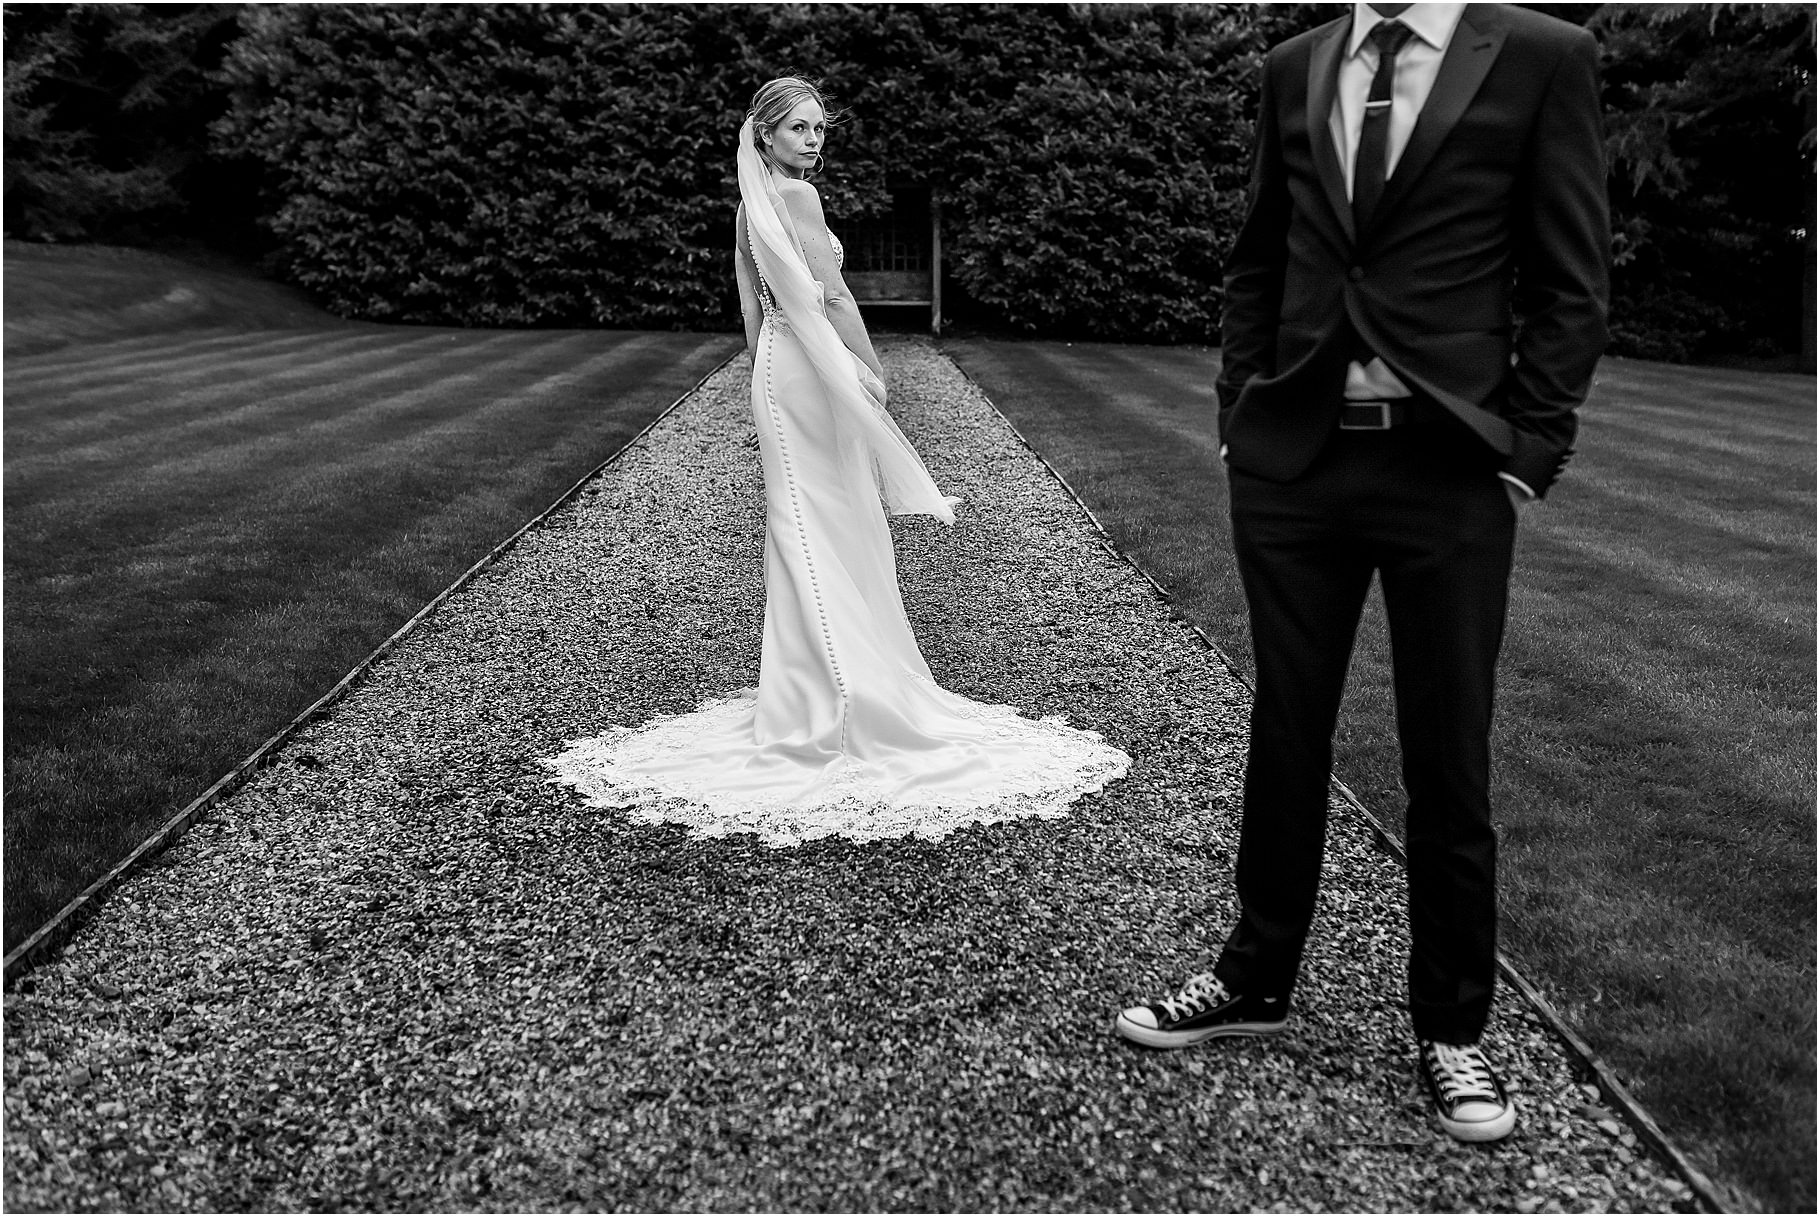 dan-wootton-photography-2017-weddings-155.jpg